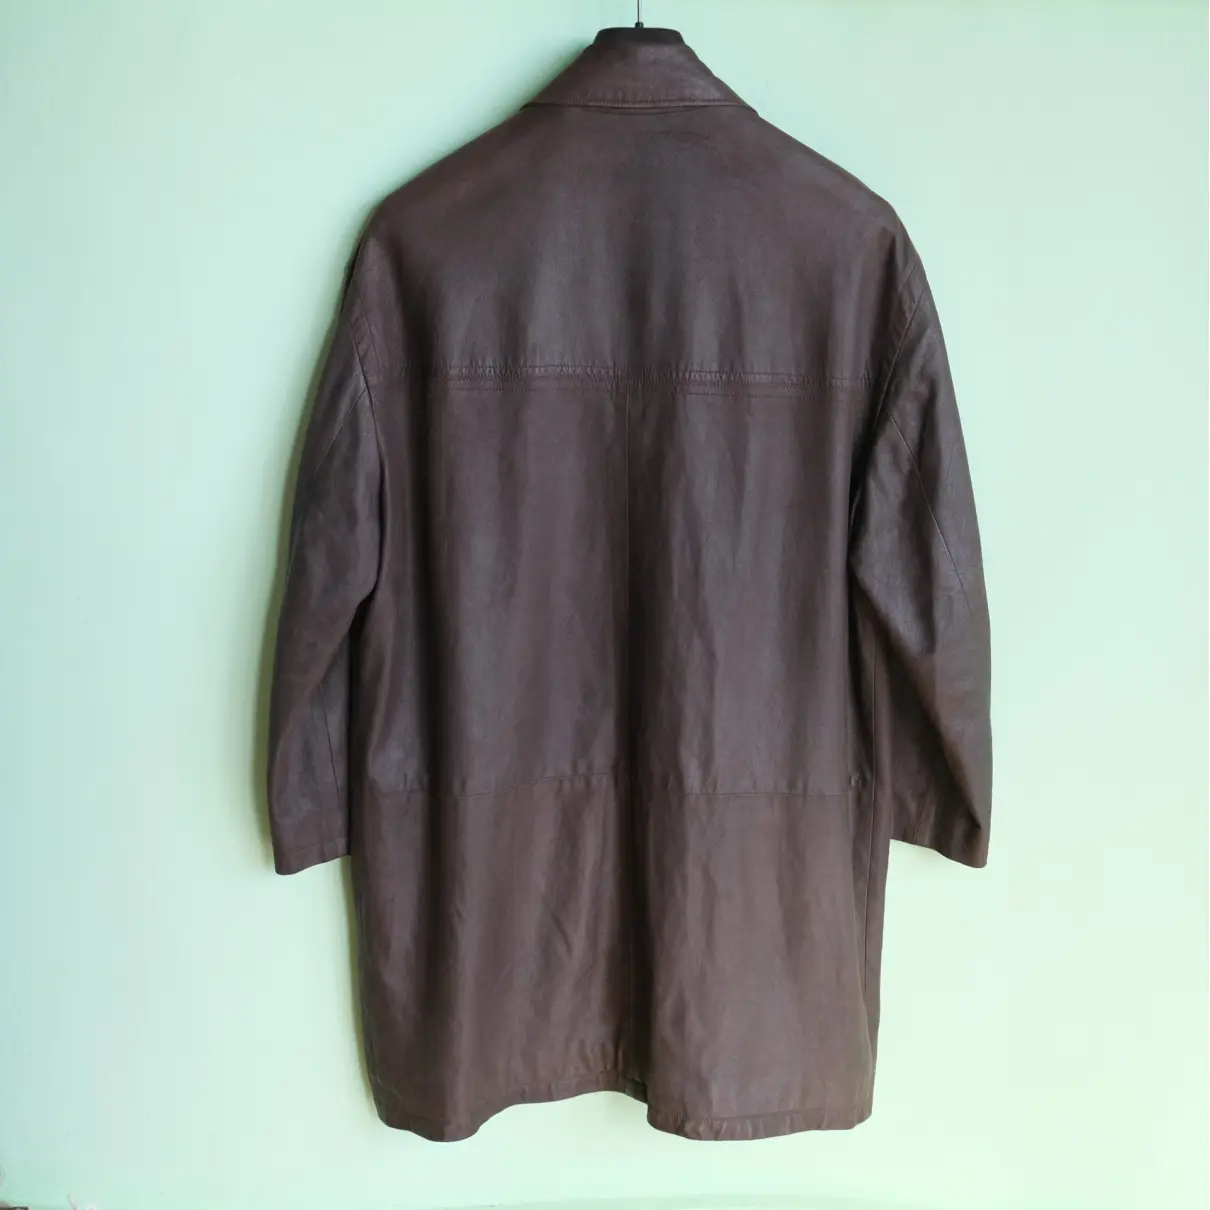 Buy SERAPHIN Leather coat online